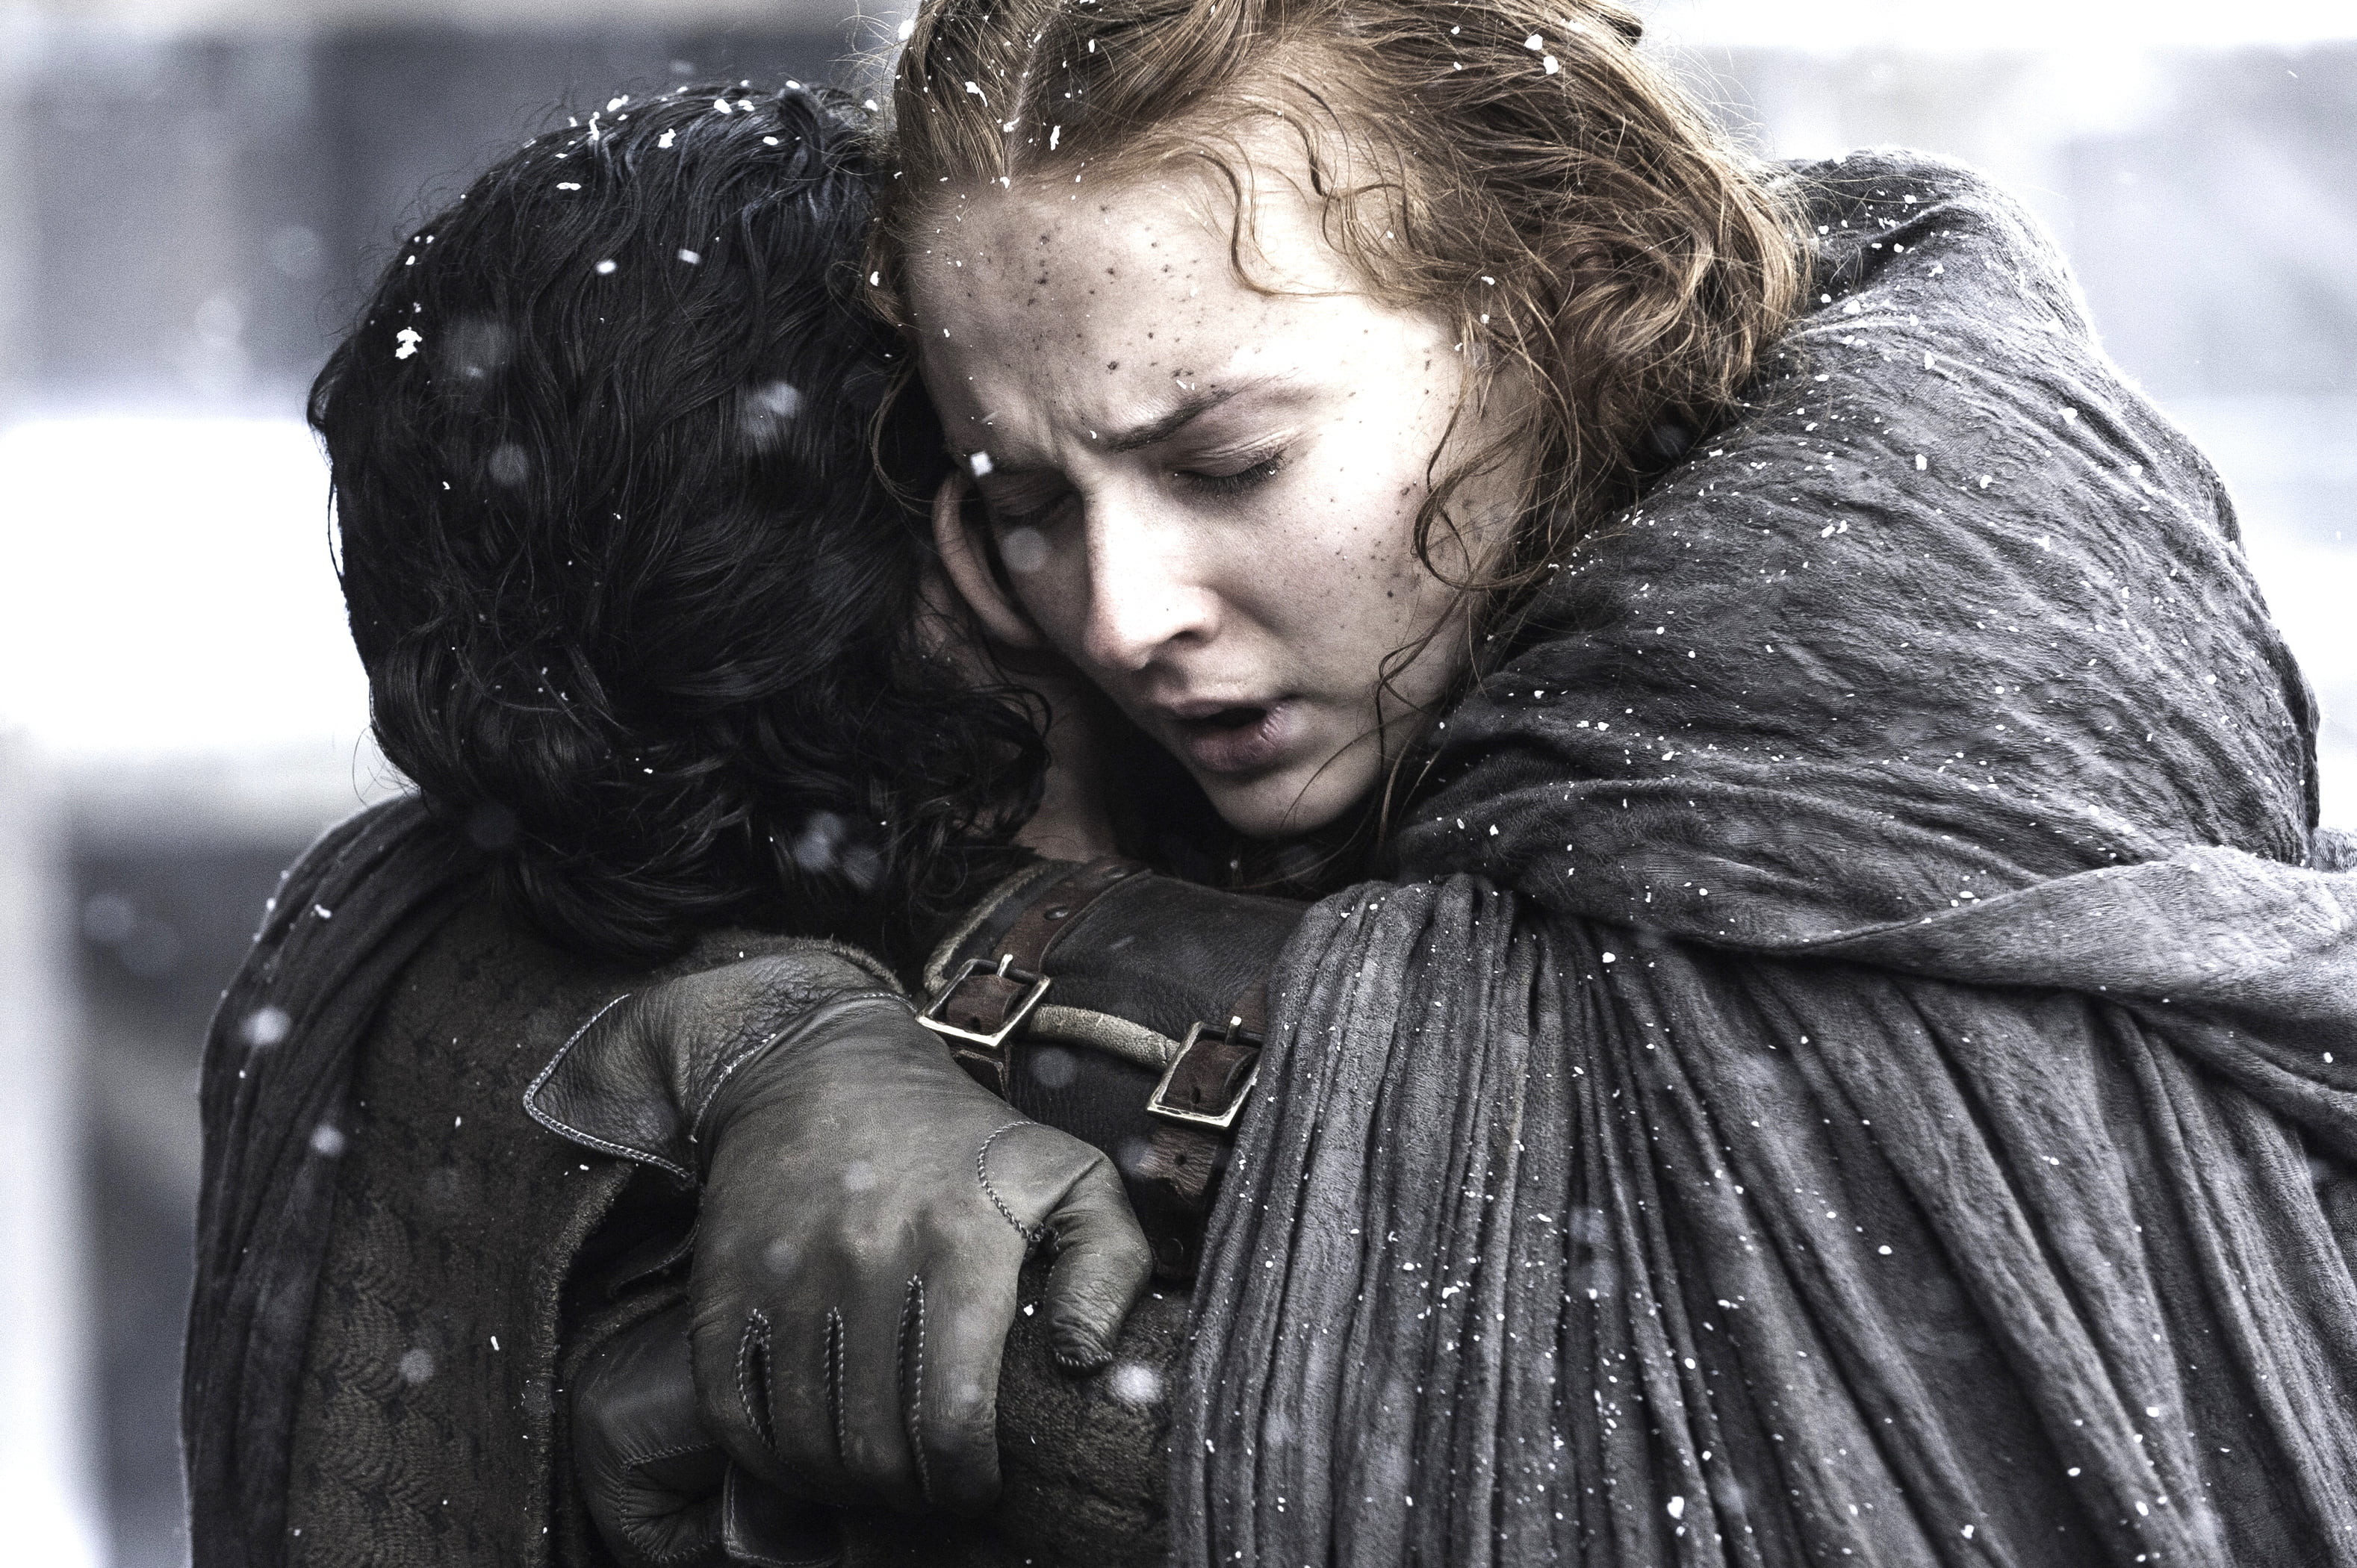 Res - 1920x1080, - Game Of Thrones Jon Sansa Reunion , HD Wallpaper & Backgrounds